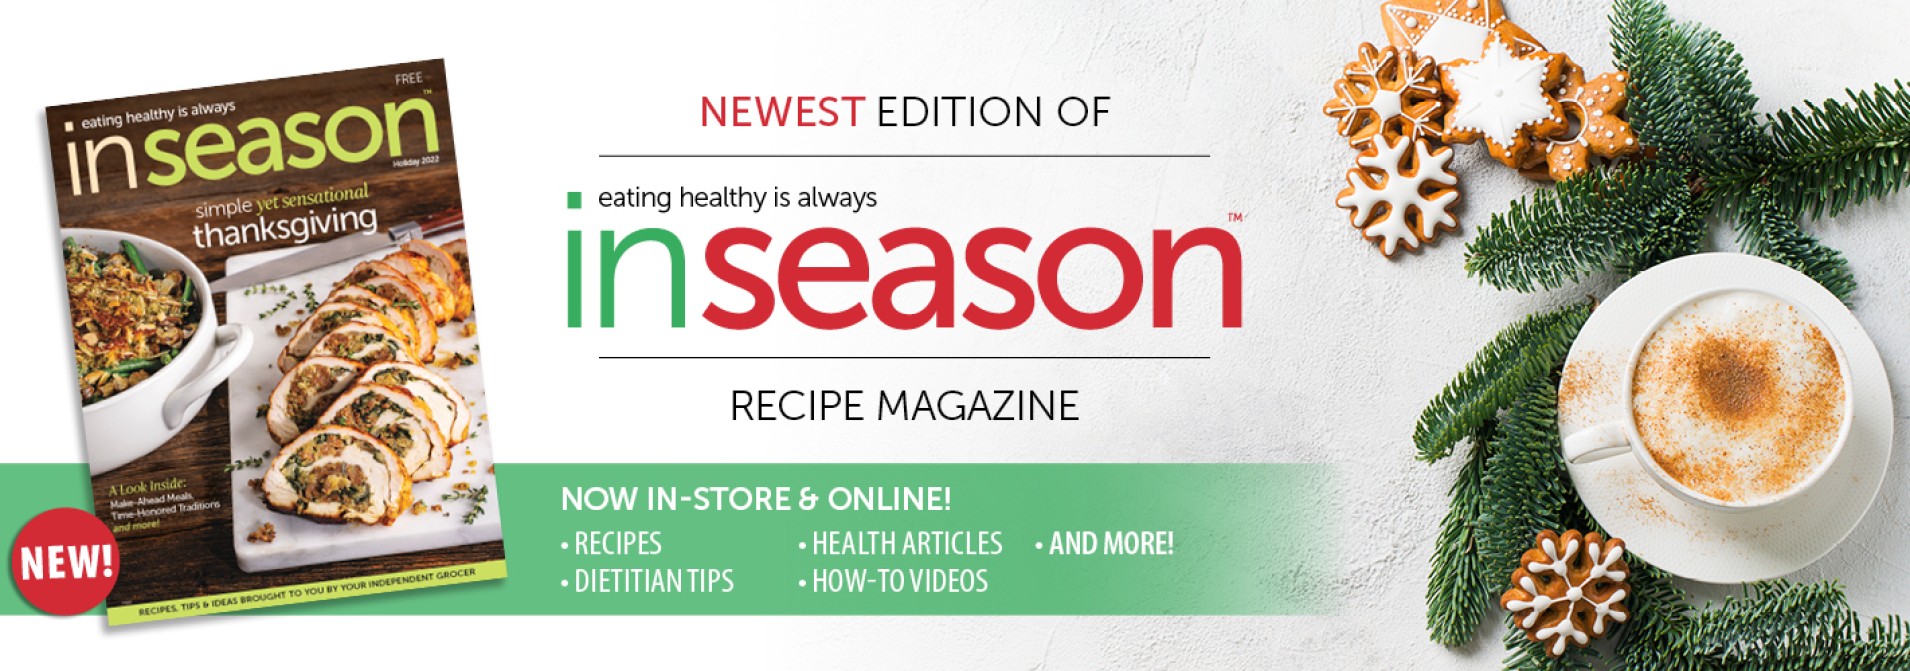 Inseason Recipe Magazine